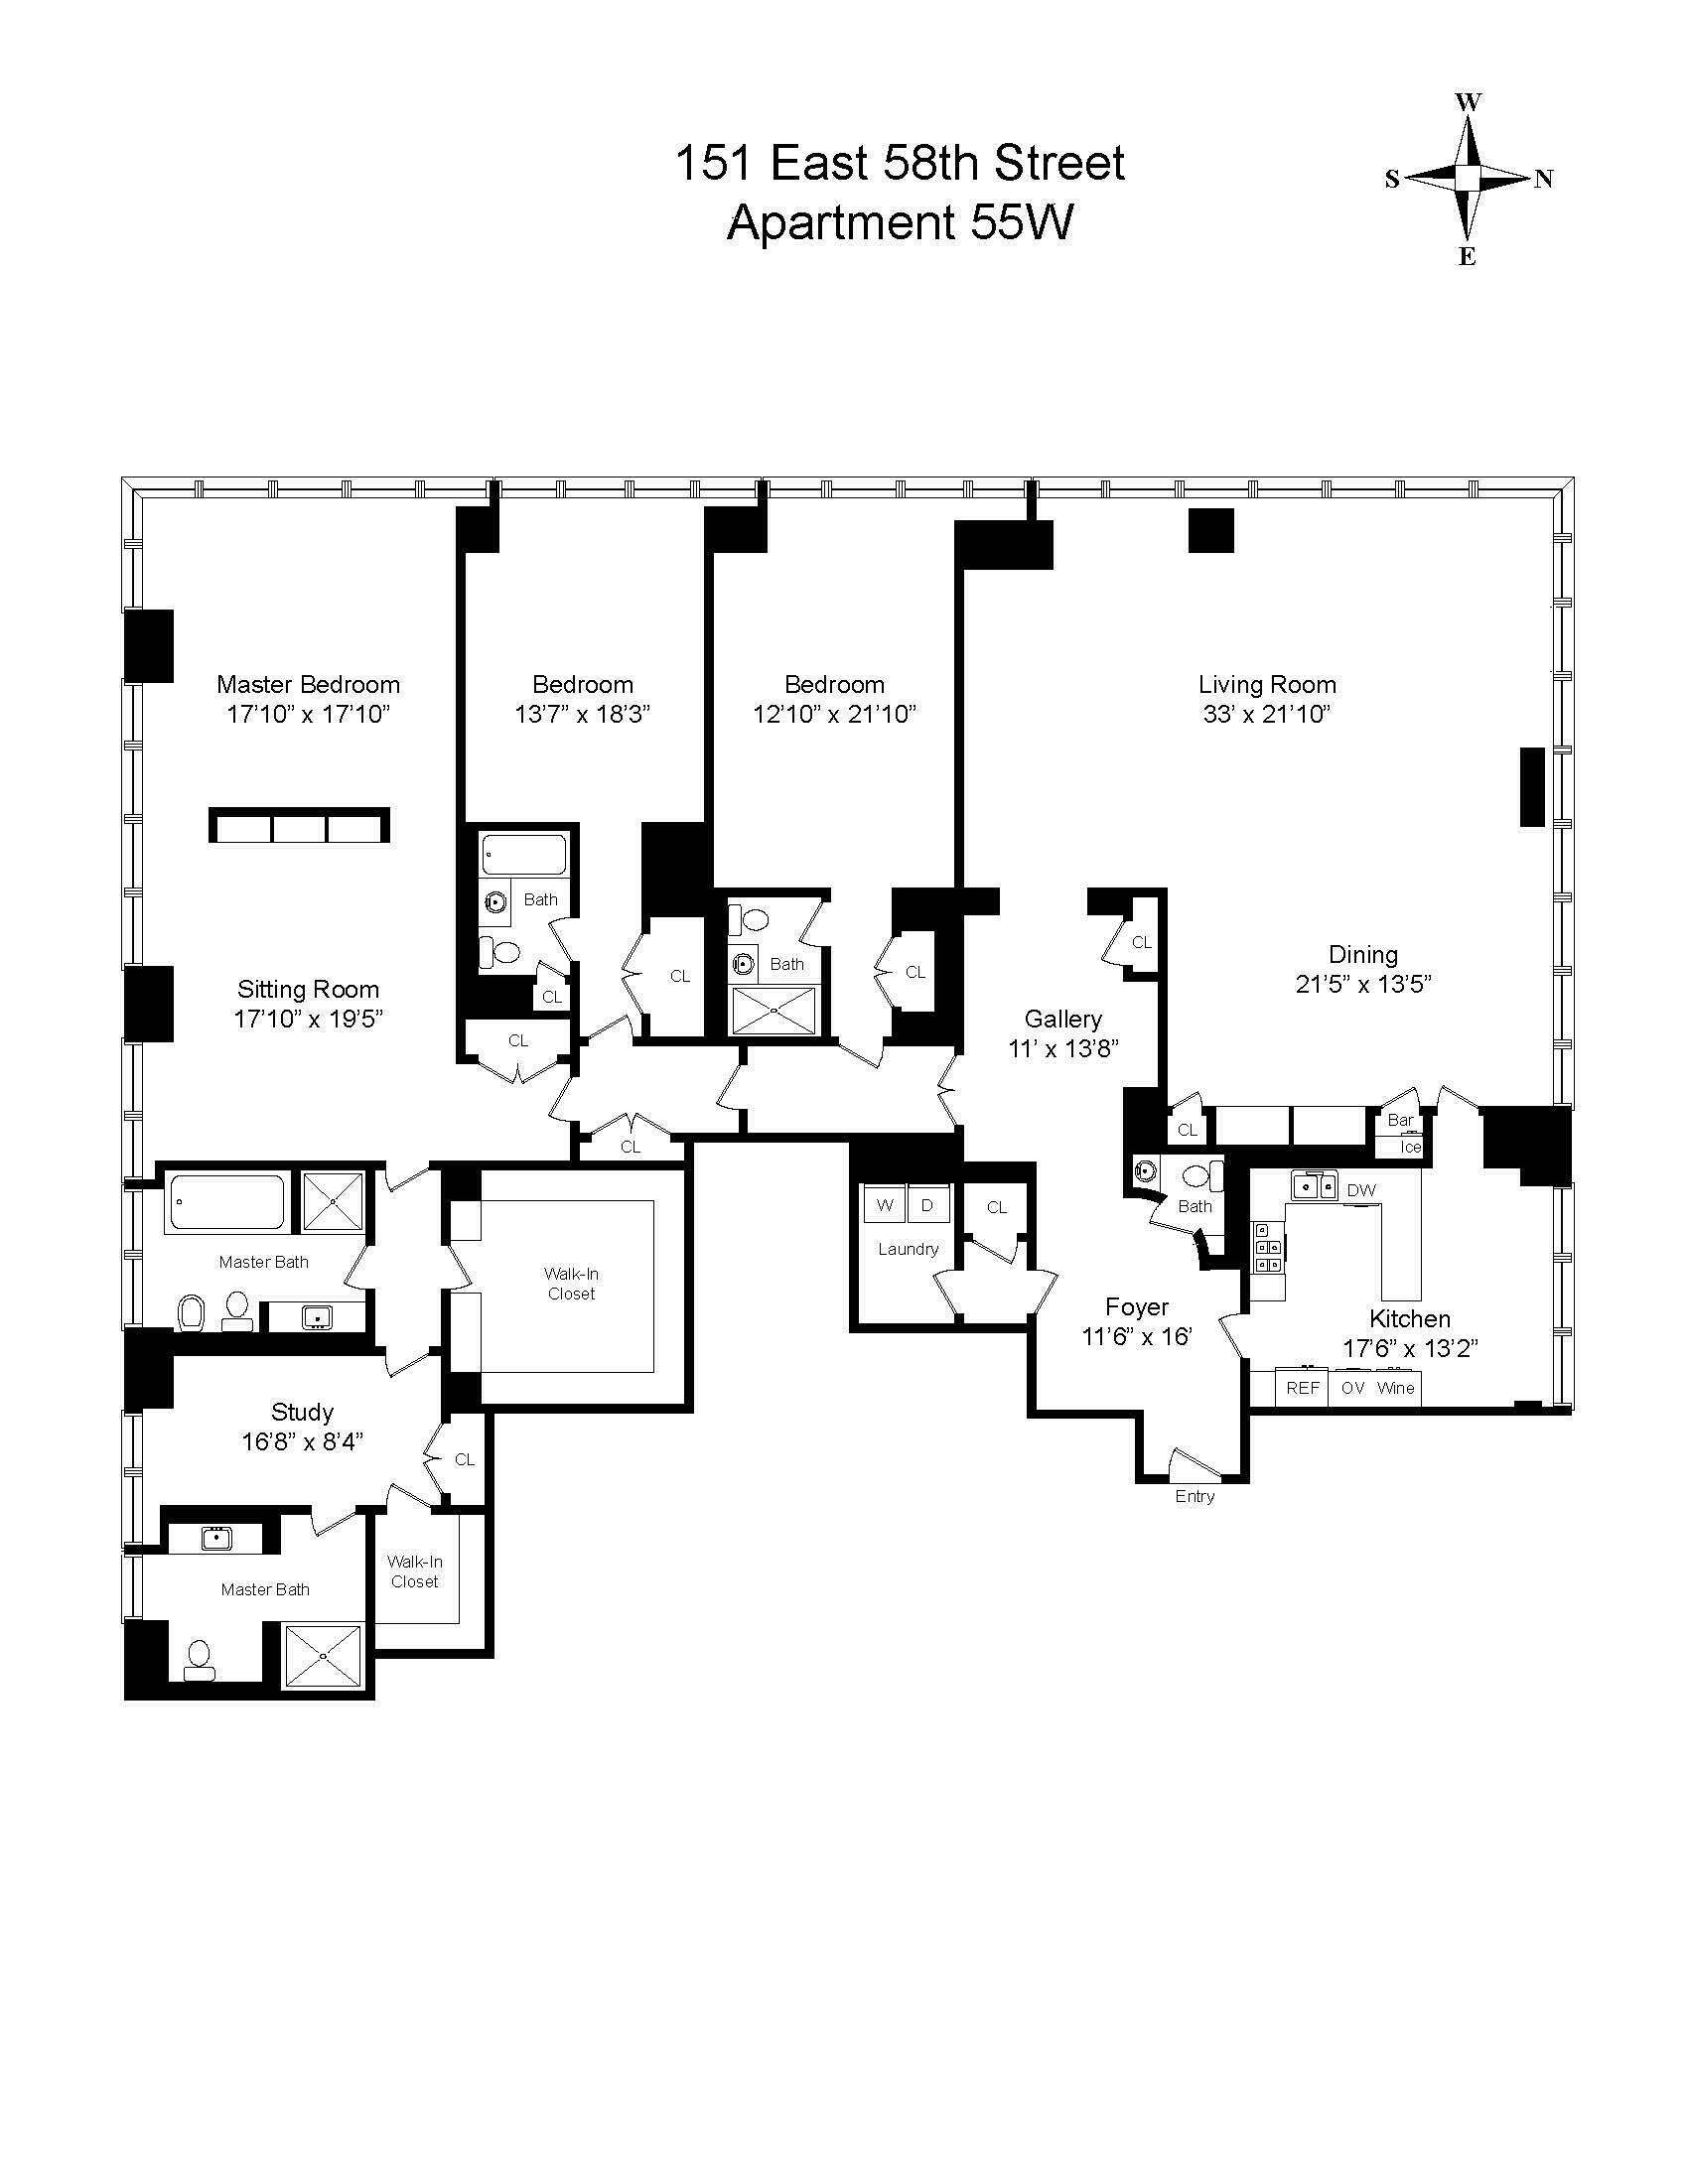 Floorplan for 151 East 58th Street, PH55W